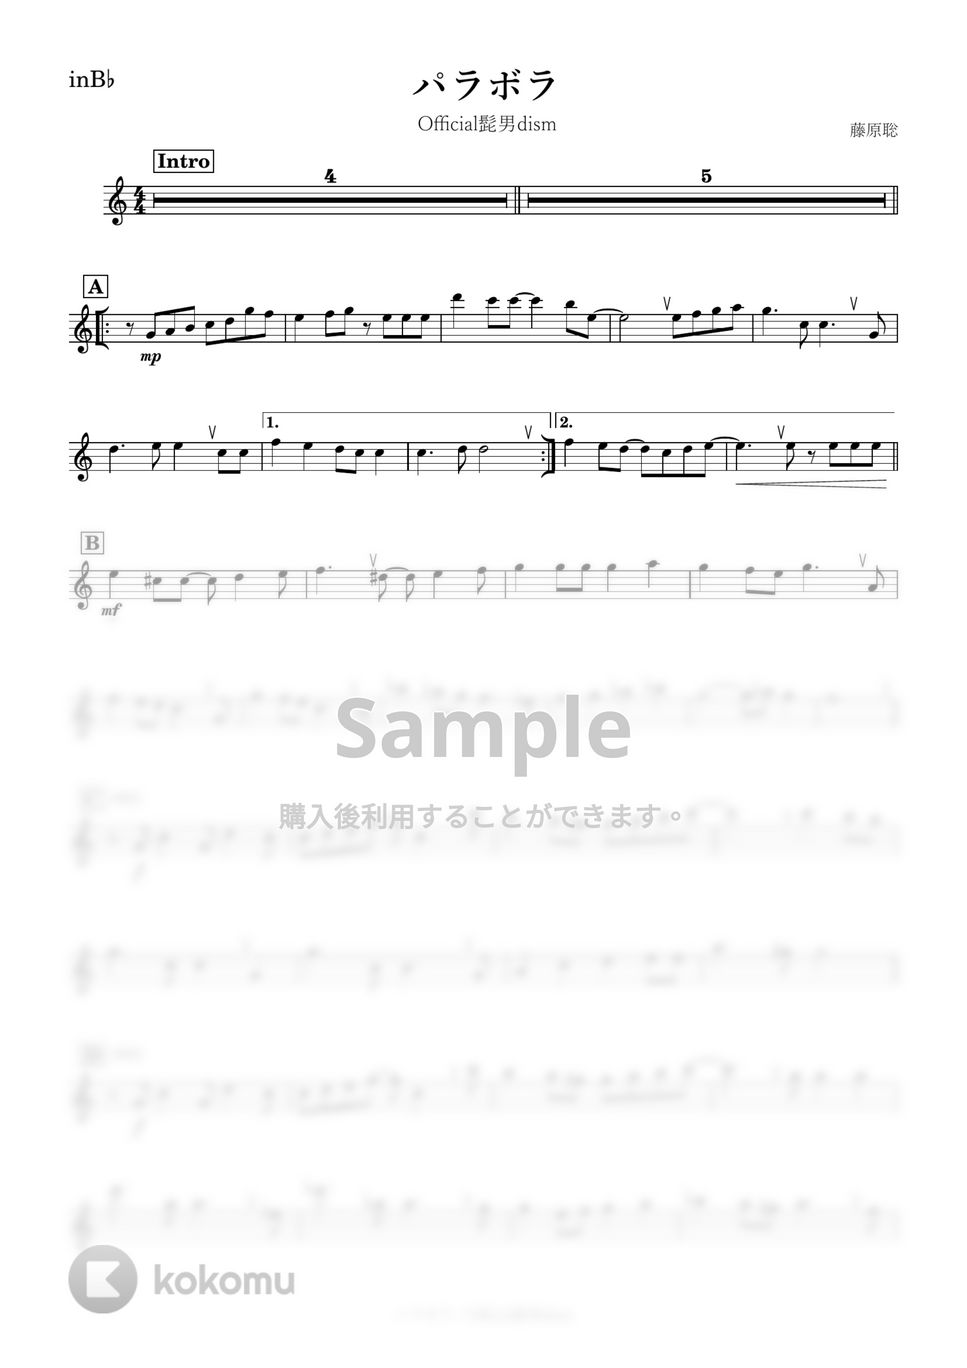 Official髭男dism - パラボラ (B♭) by kanamusic